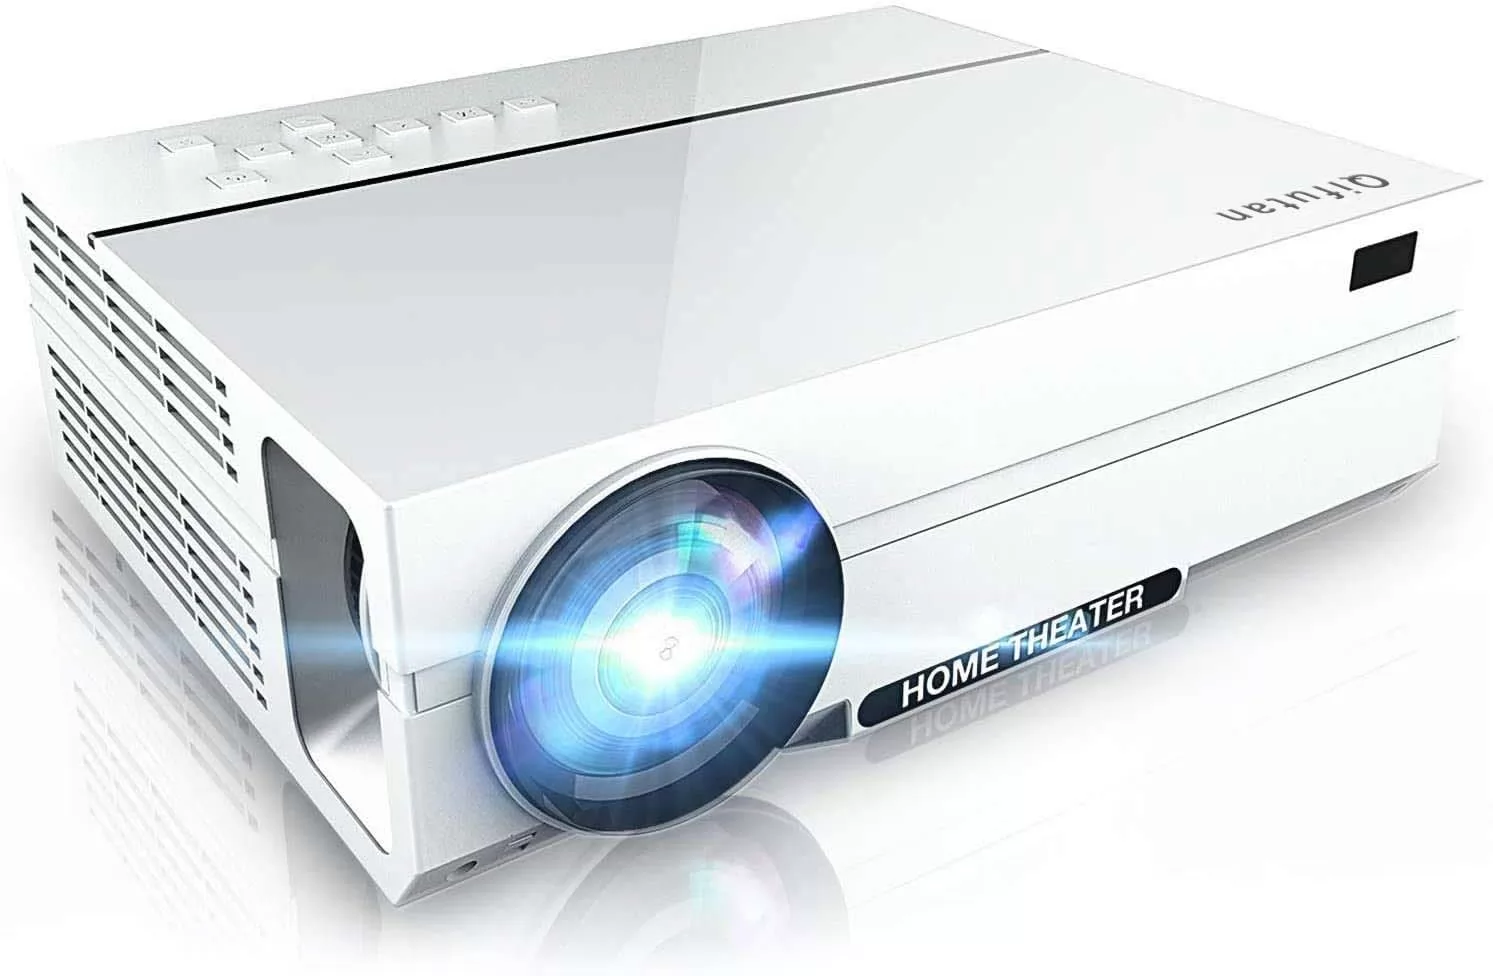 Qifutan Full HD Support 1080p Video Projector, Native 1920 x 1080p Projector, 50000 Hrs, 2X HiFi Speakers,Supports TV Stick, HDMI, USB